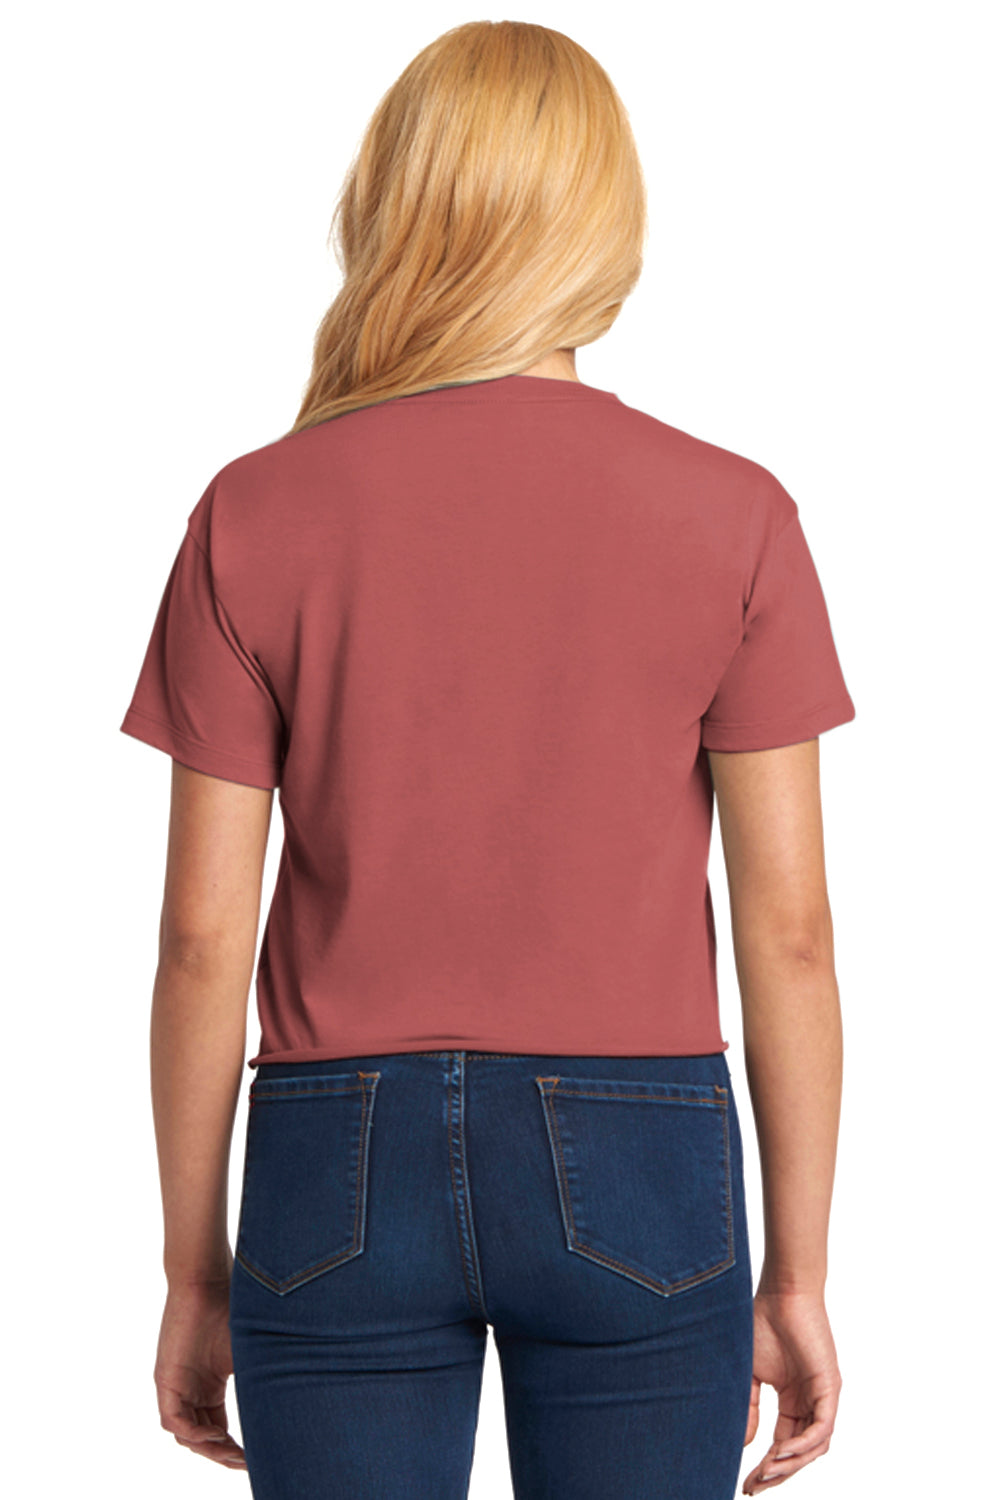 Next Level N5080 Womens Festival Cali Crop Short Sleeve Crewneck T-Shirt Paprika Red Back